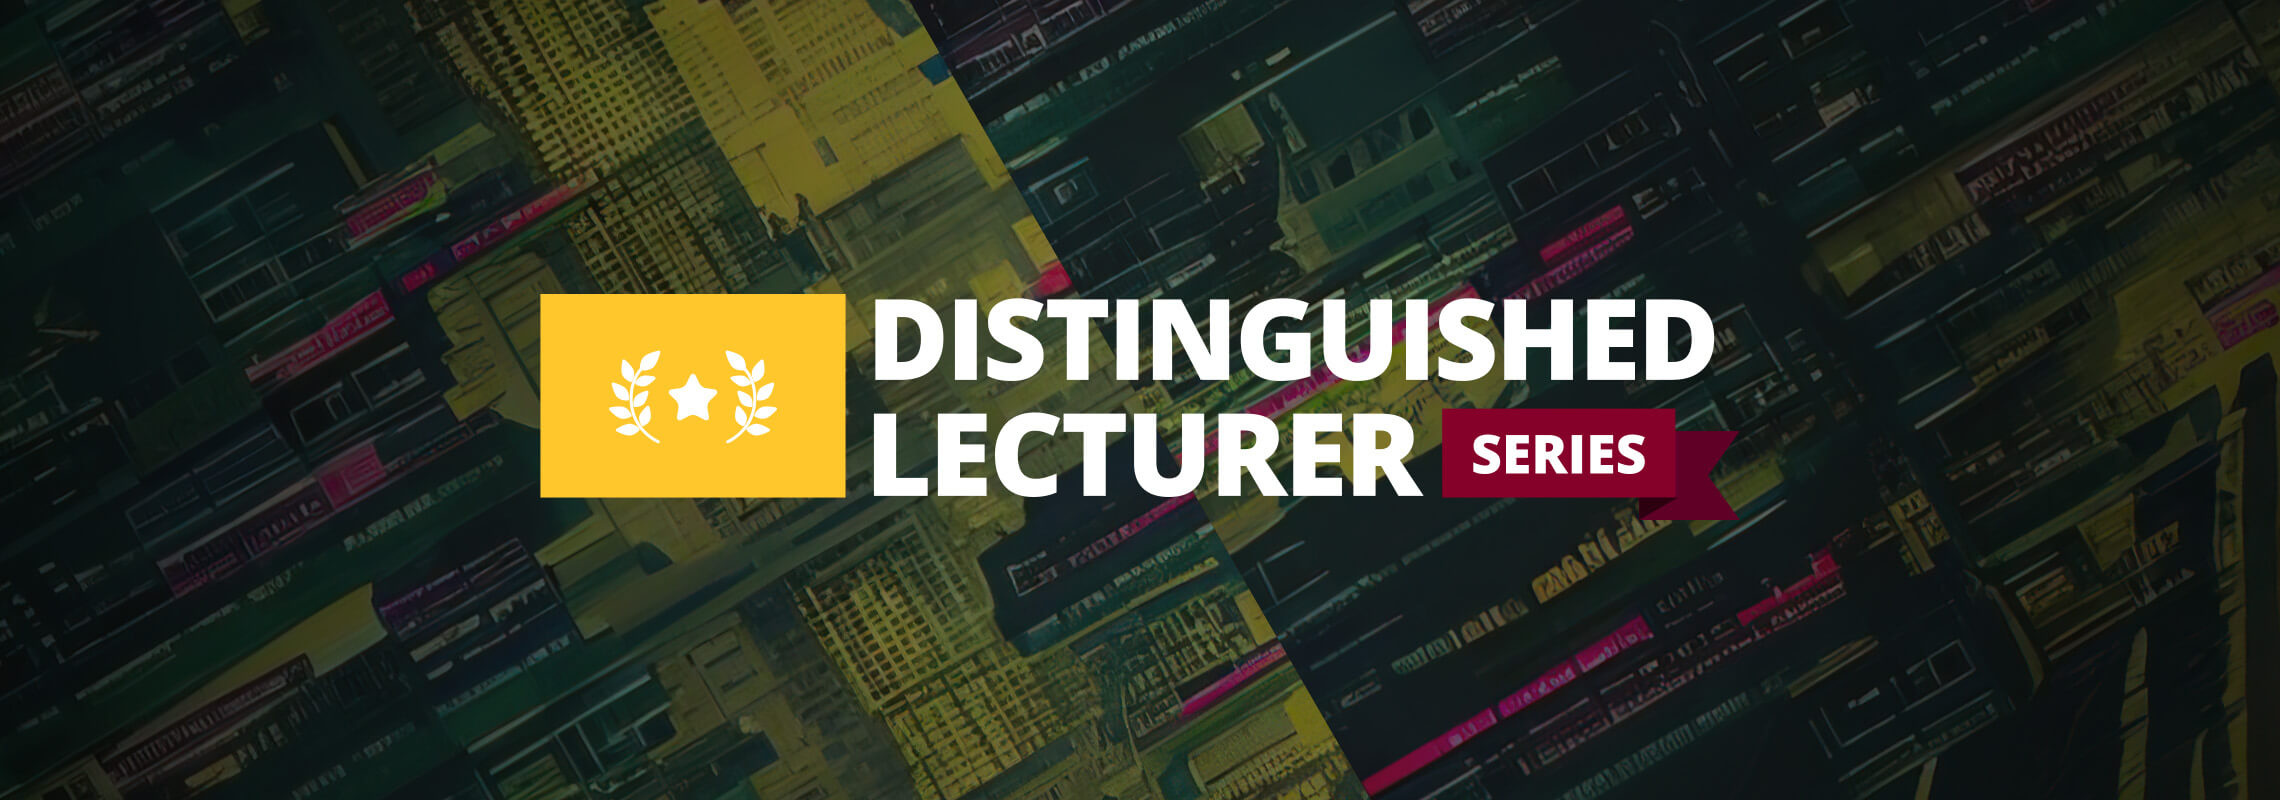 Distinguished Lecturer Series